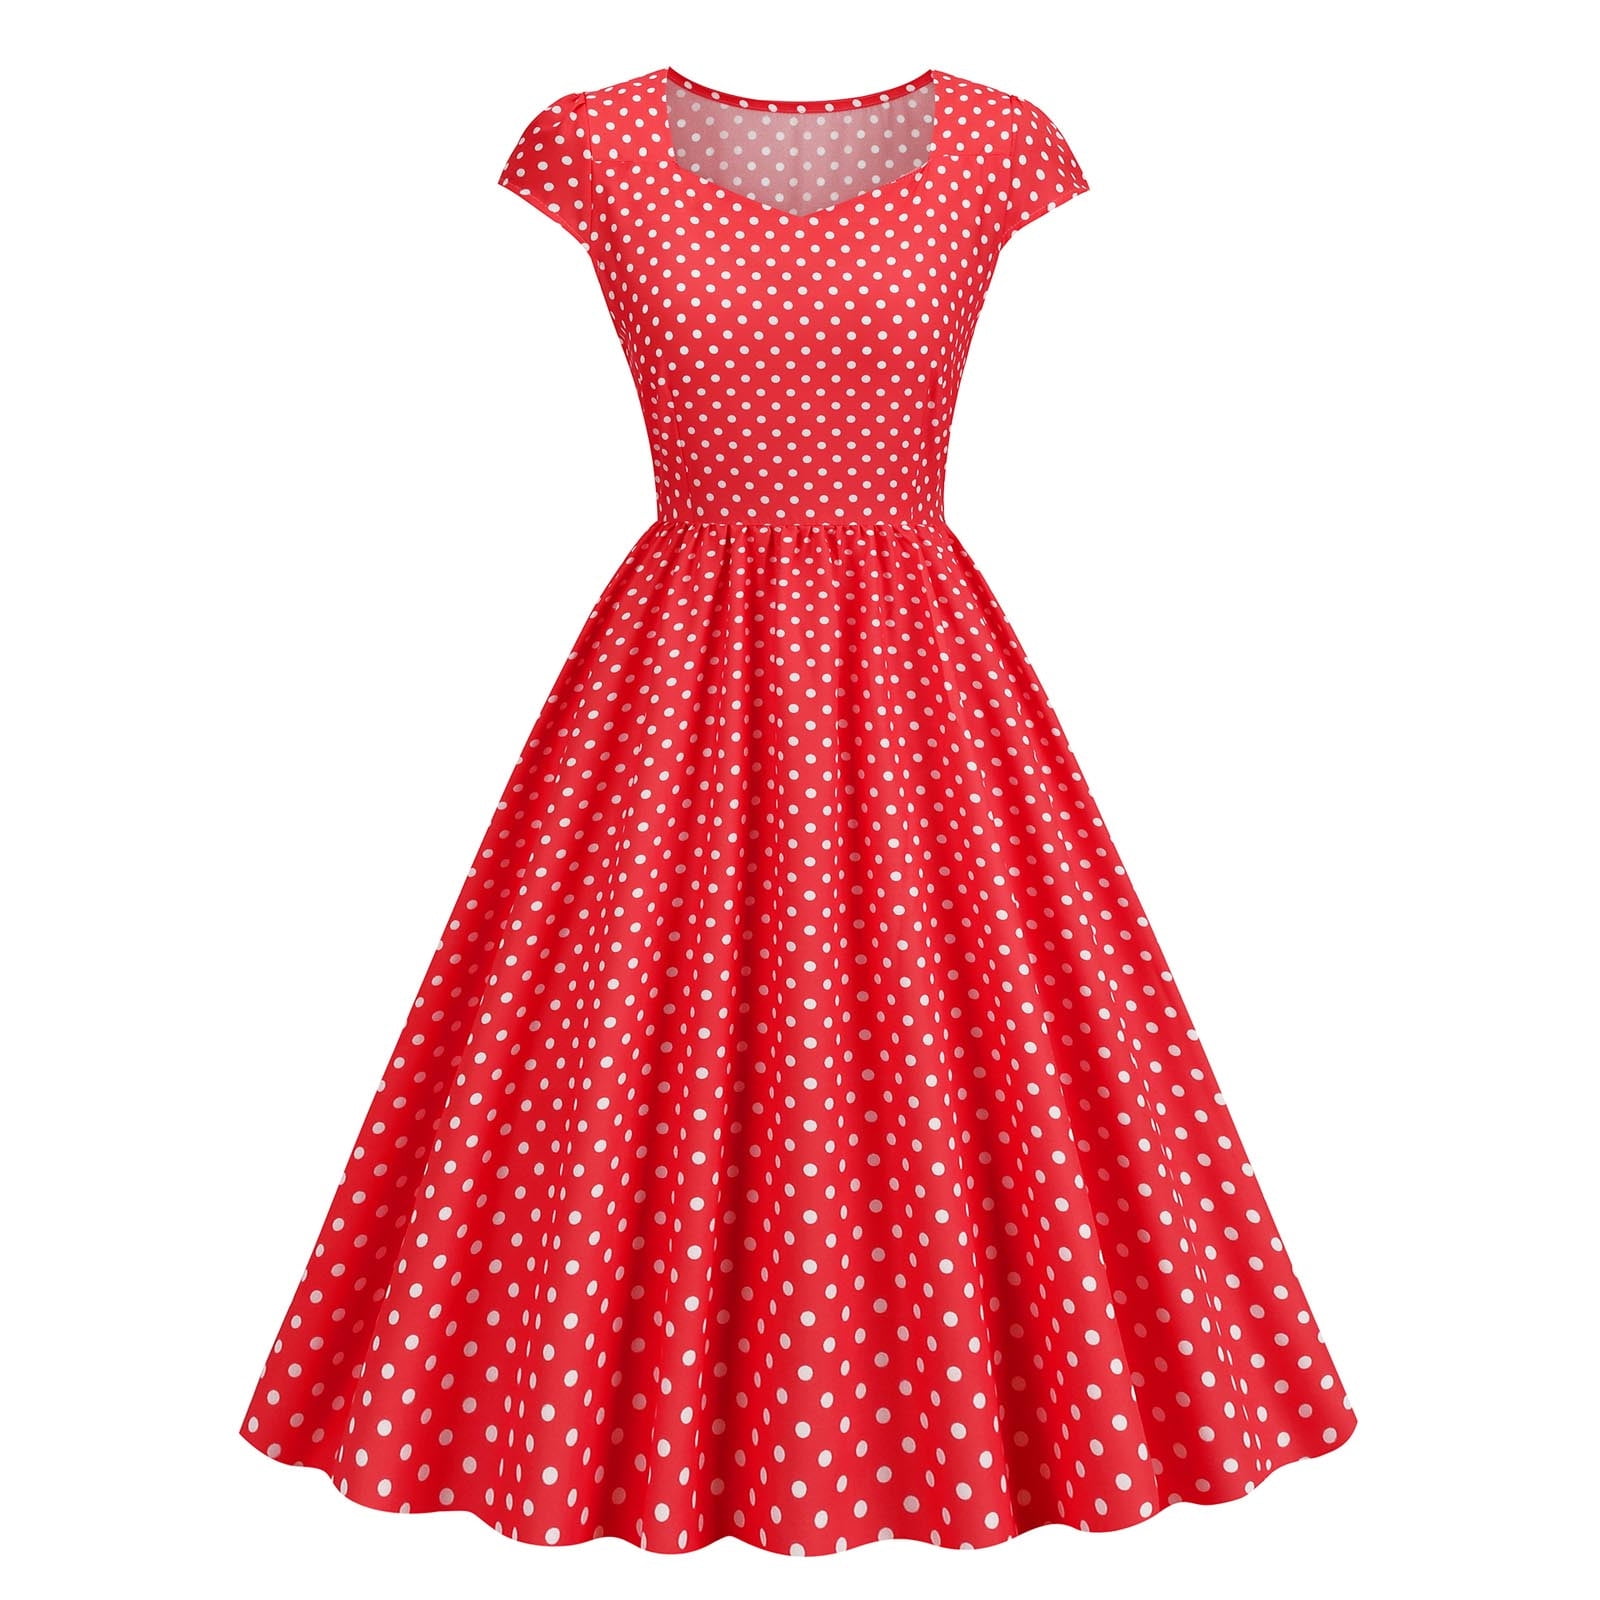 XFLWAM Womens 50s 60s Vintage Dress 1950s Retro Rockabilly Audrey